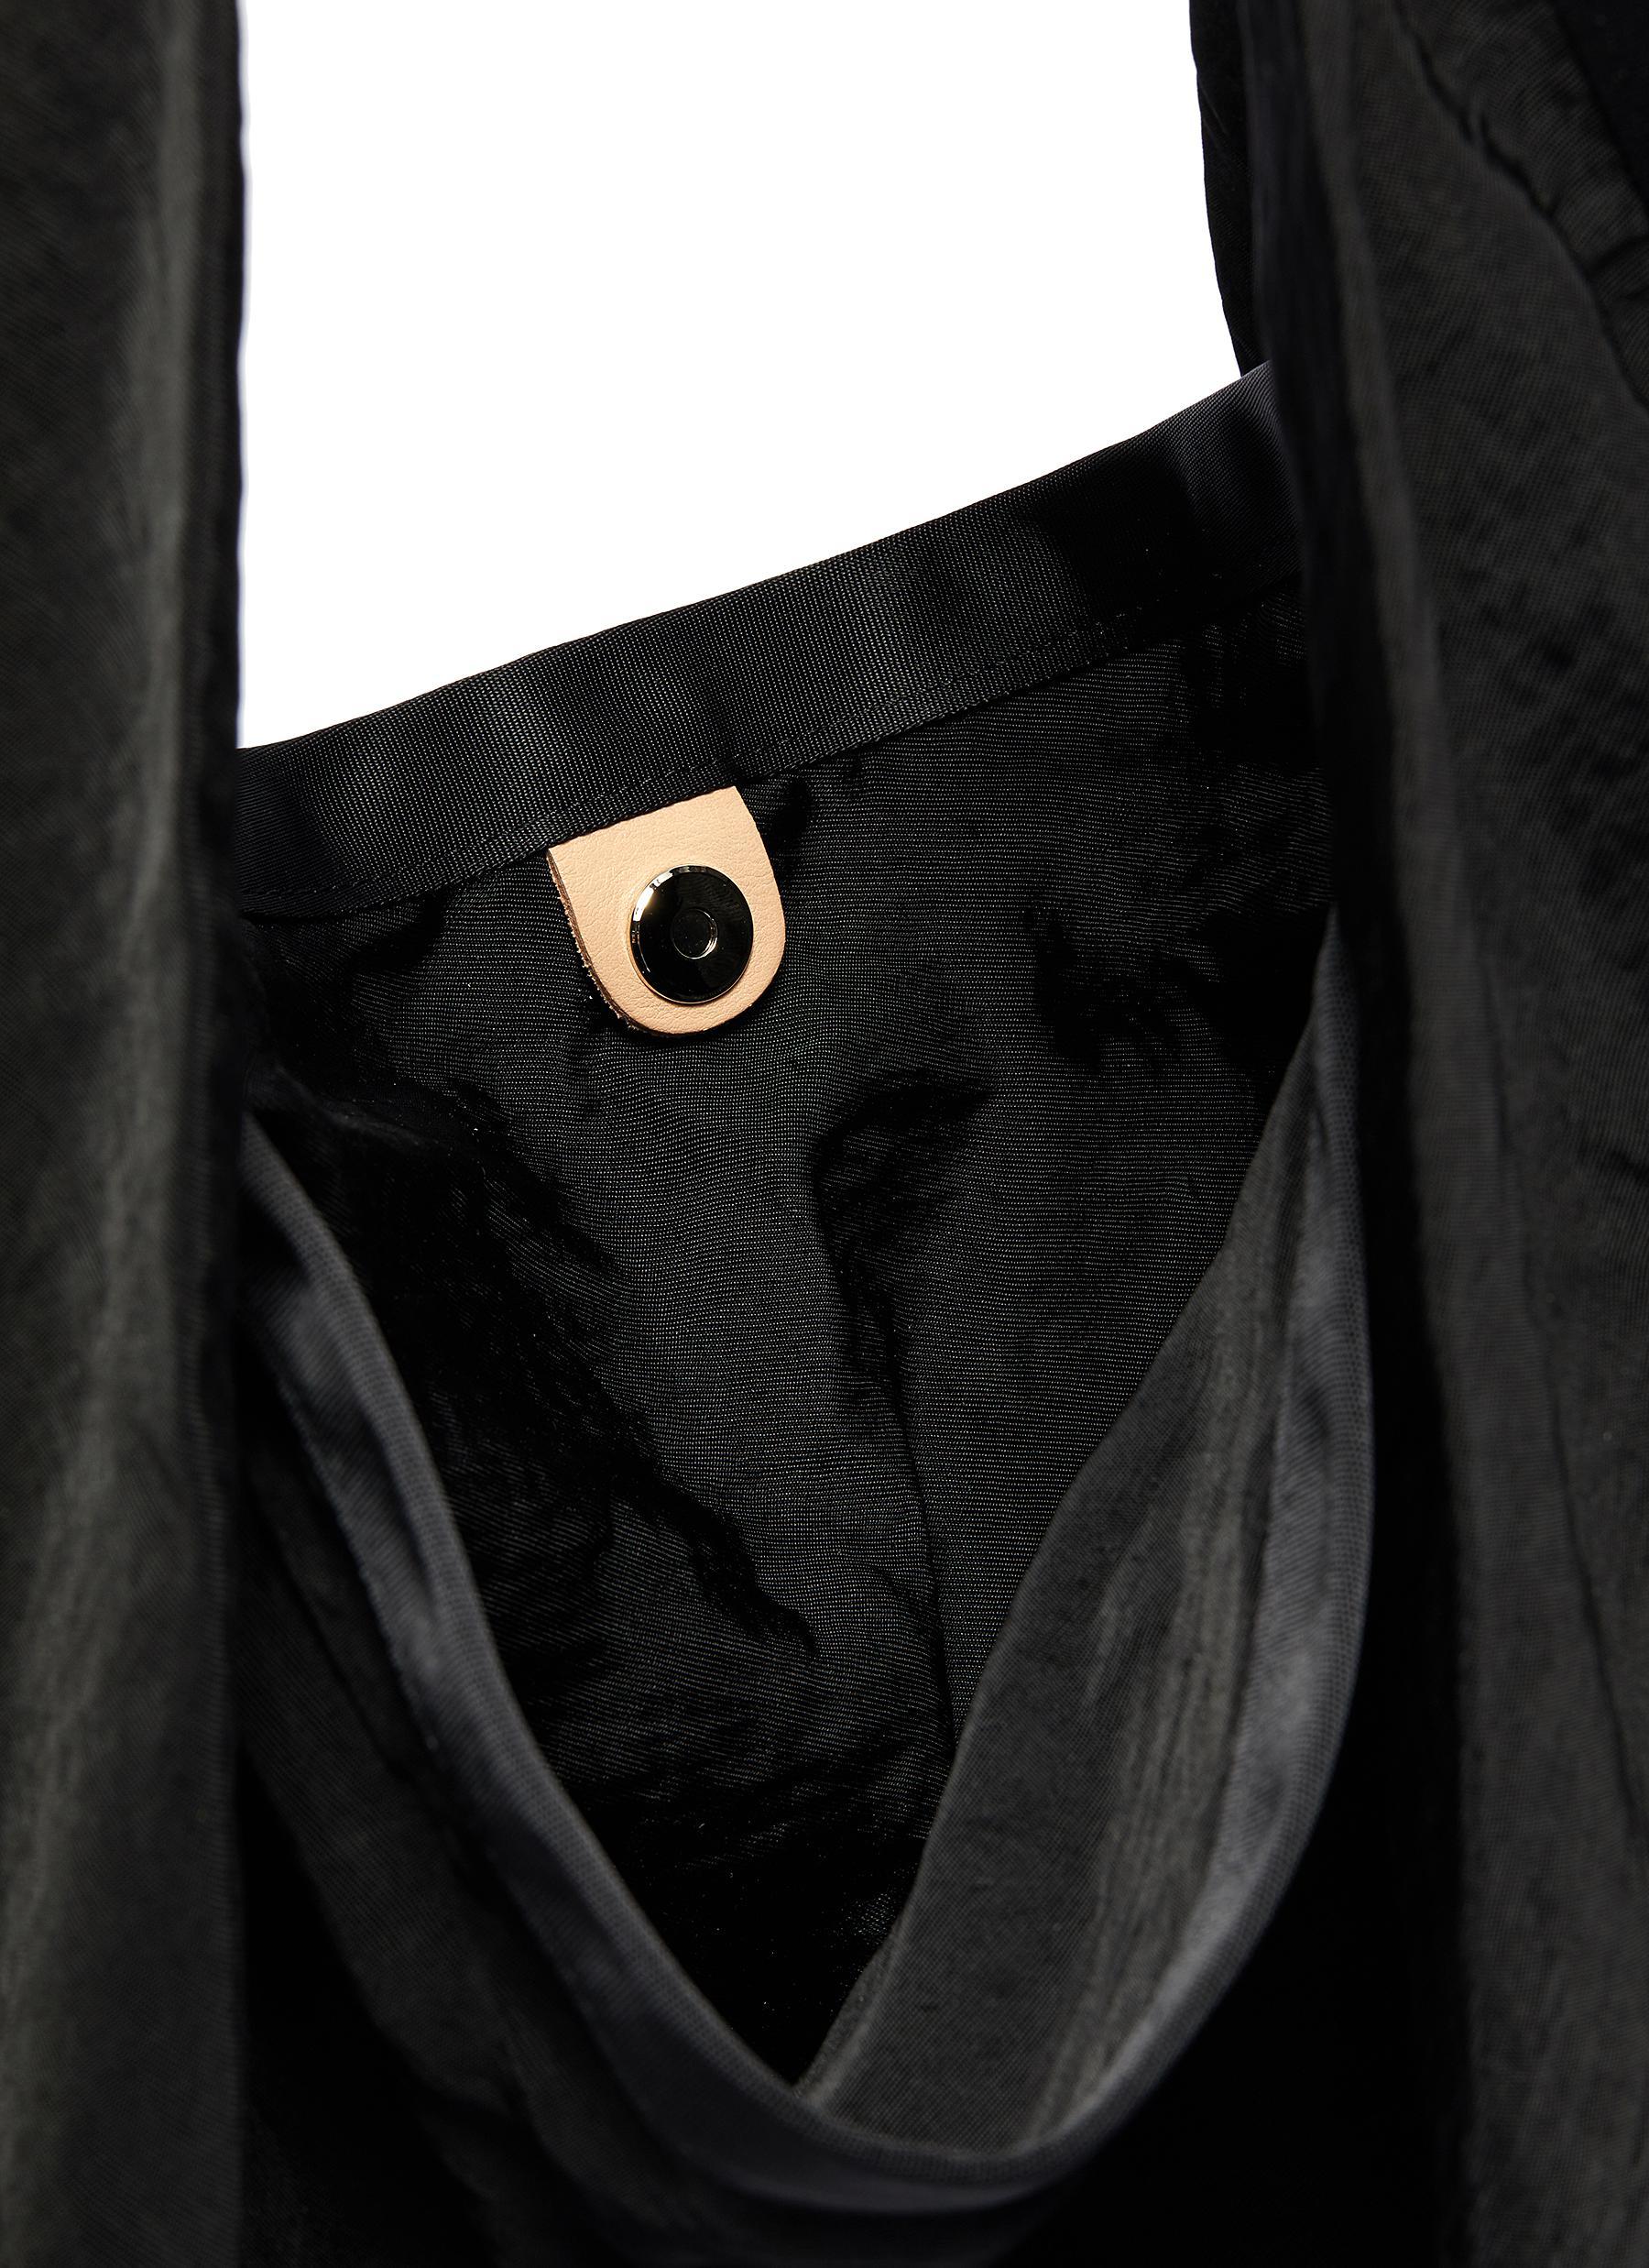 Hender Scheme Synthetic 'origami' Bag in Black for Men - Lyst